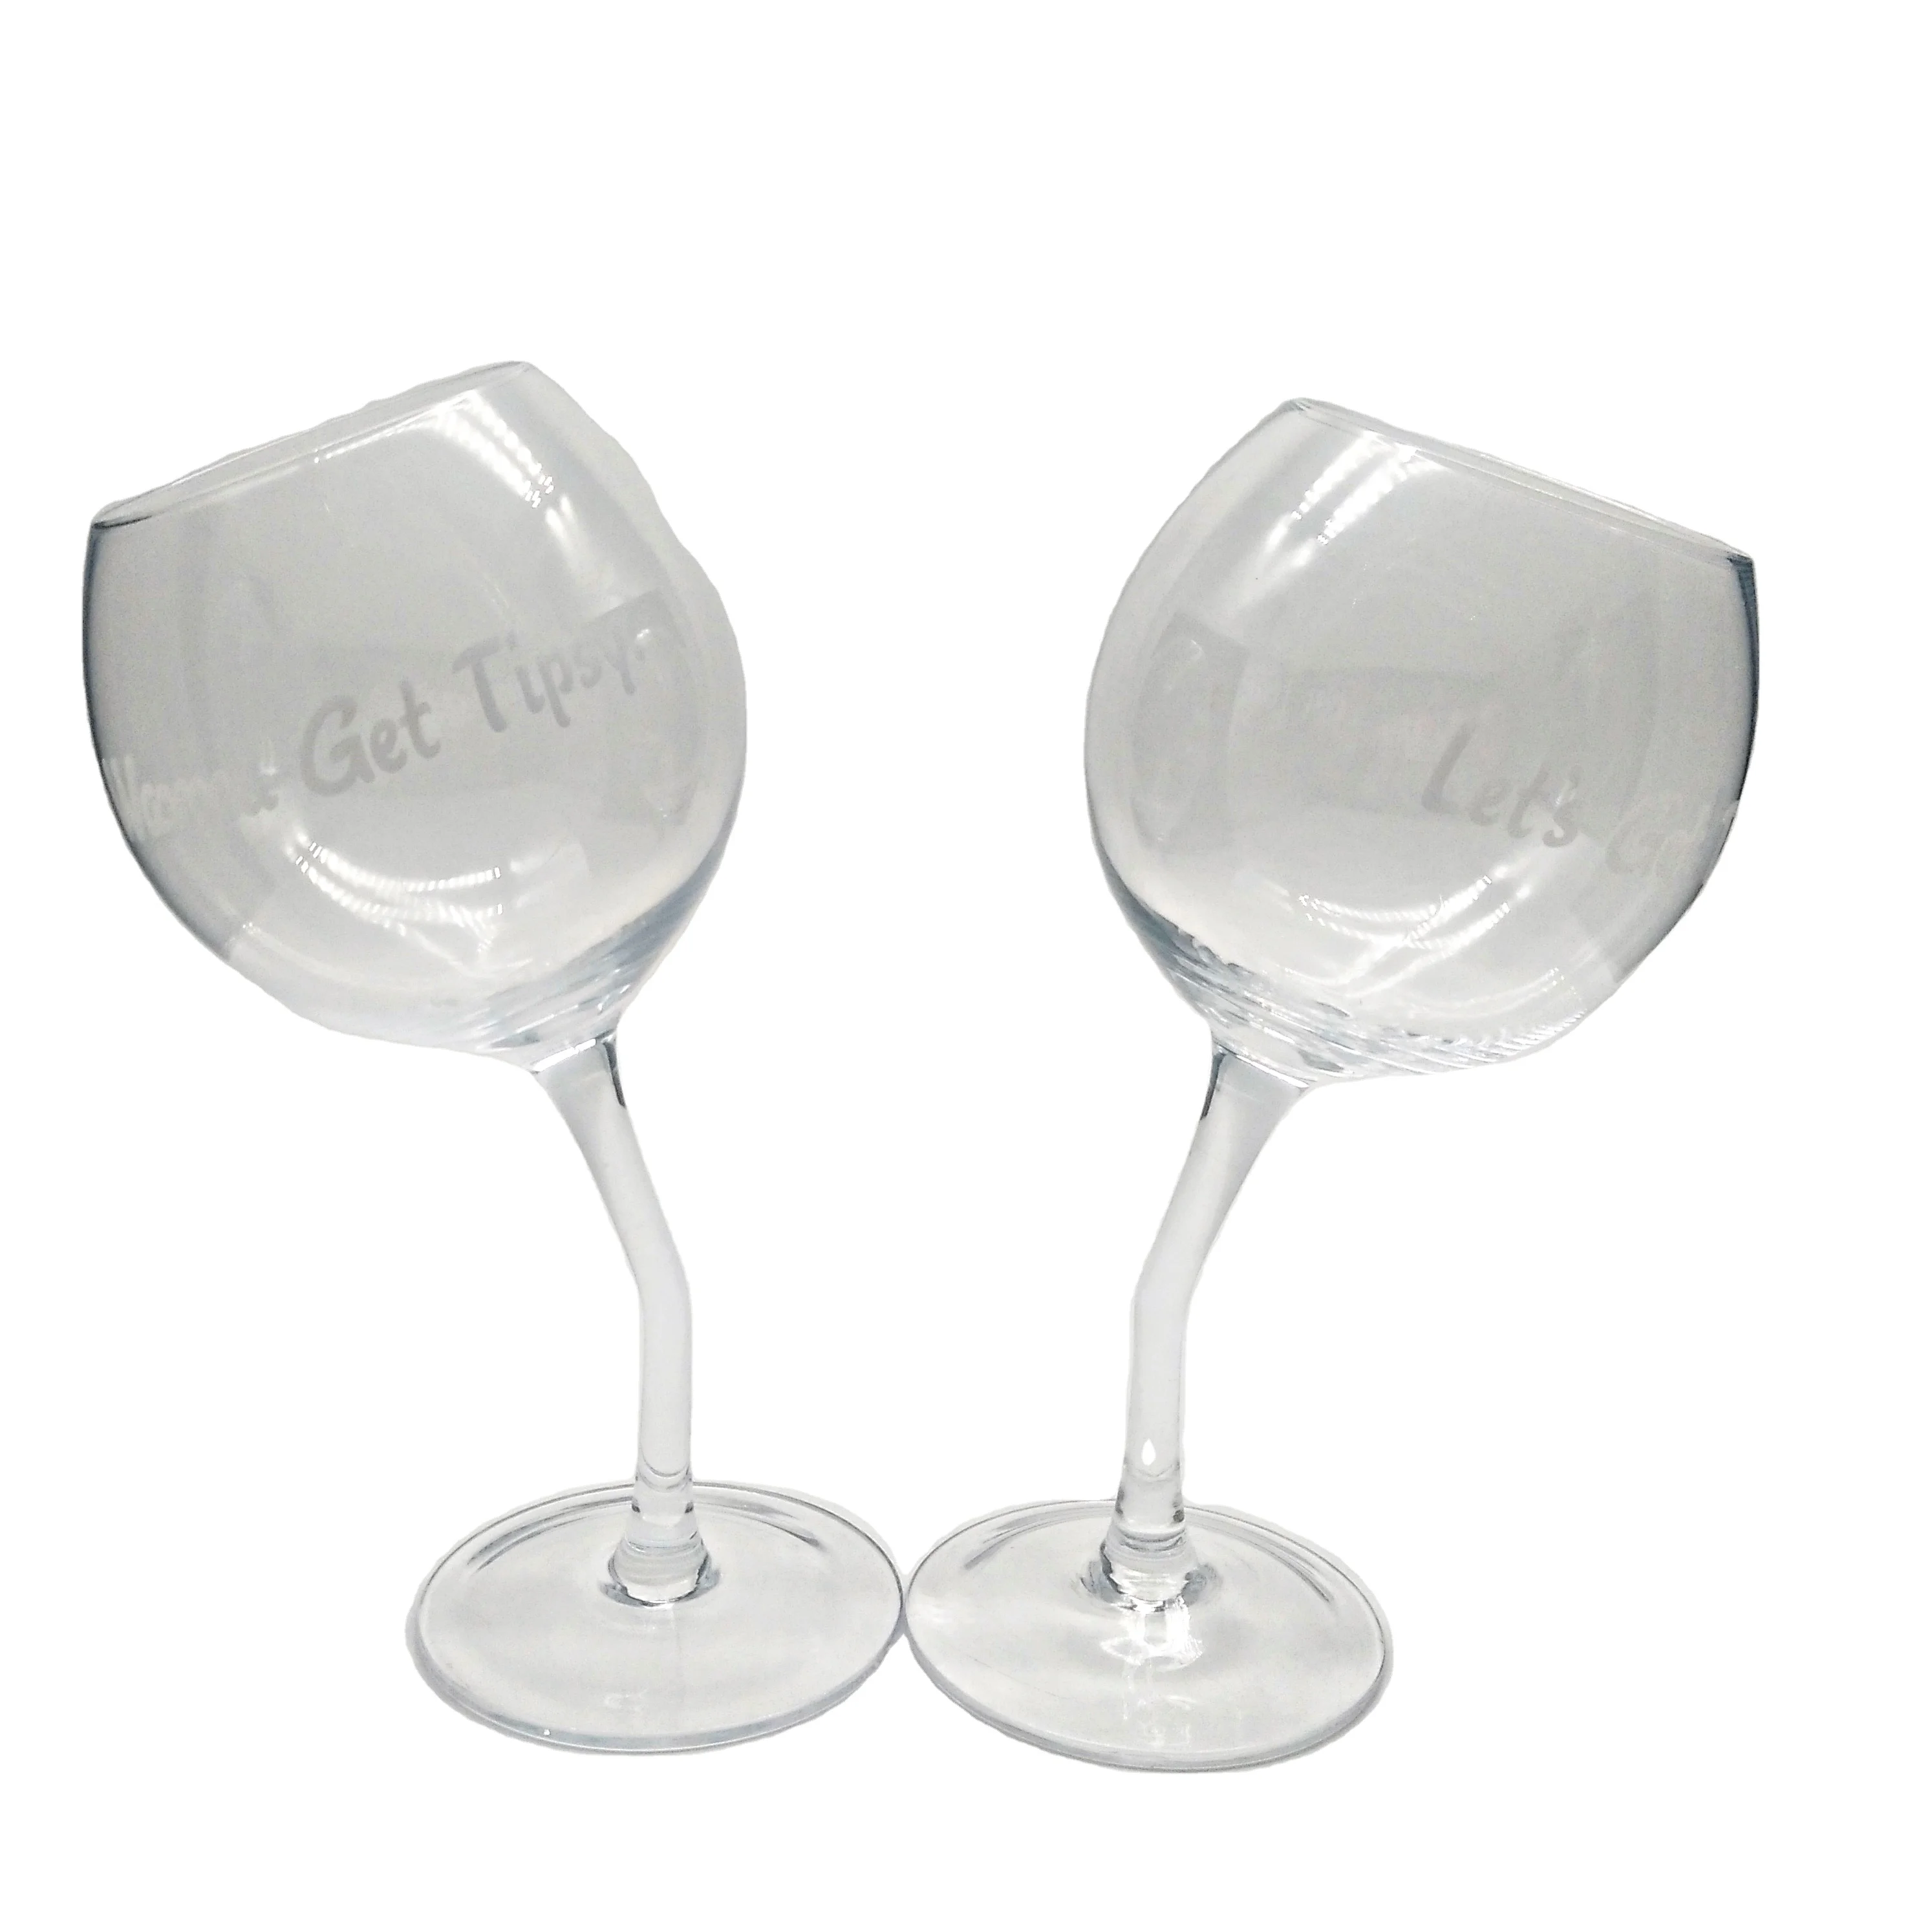 Tipsy Wine Glasses Set of 2 Glasses Unique Fun Gift Party 10 oz